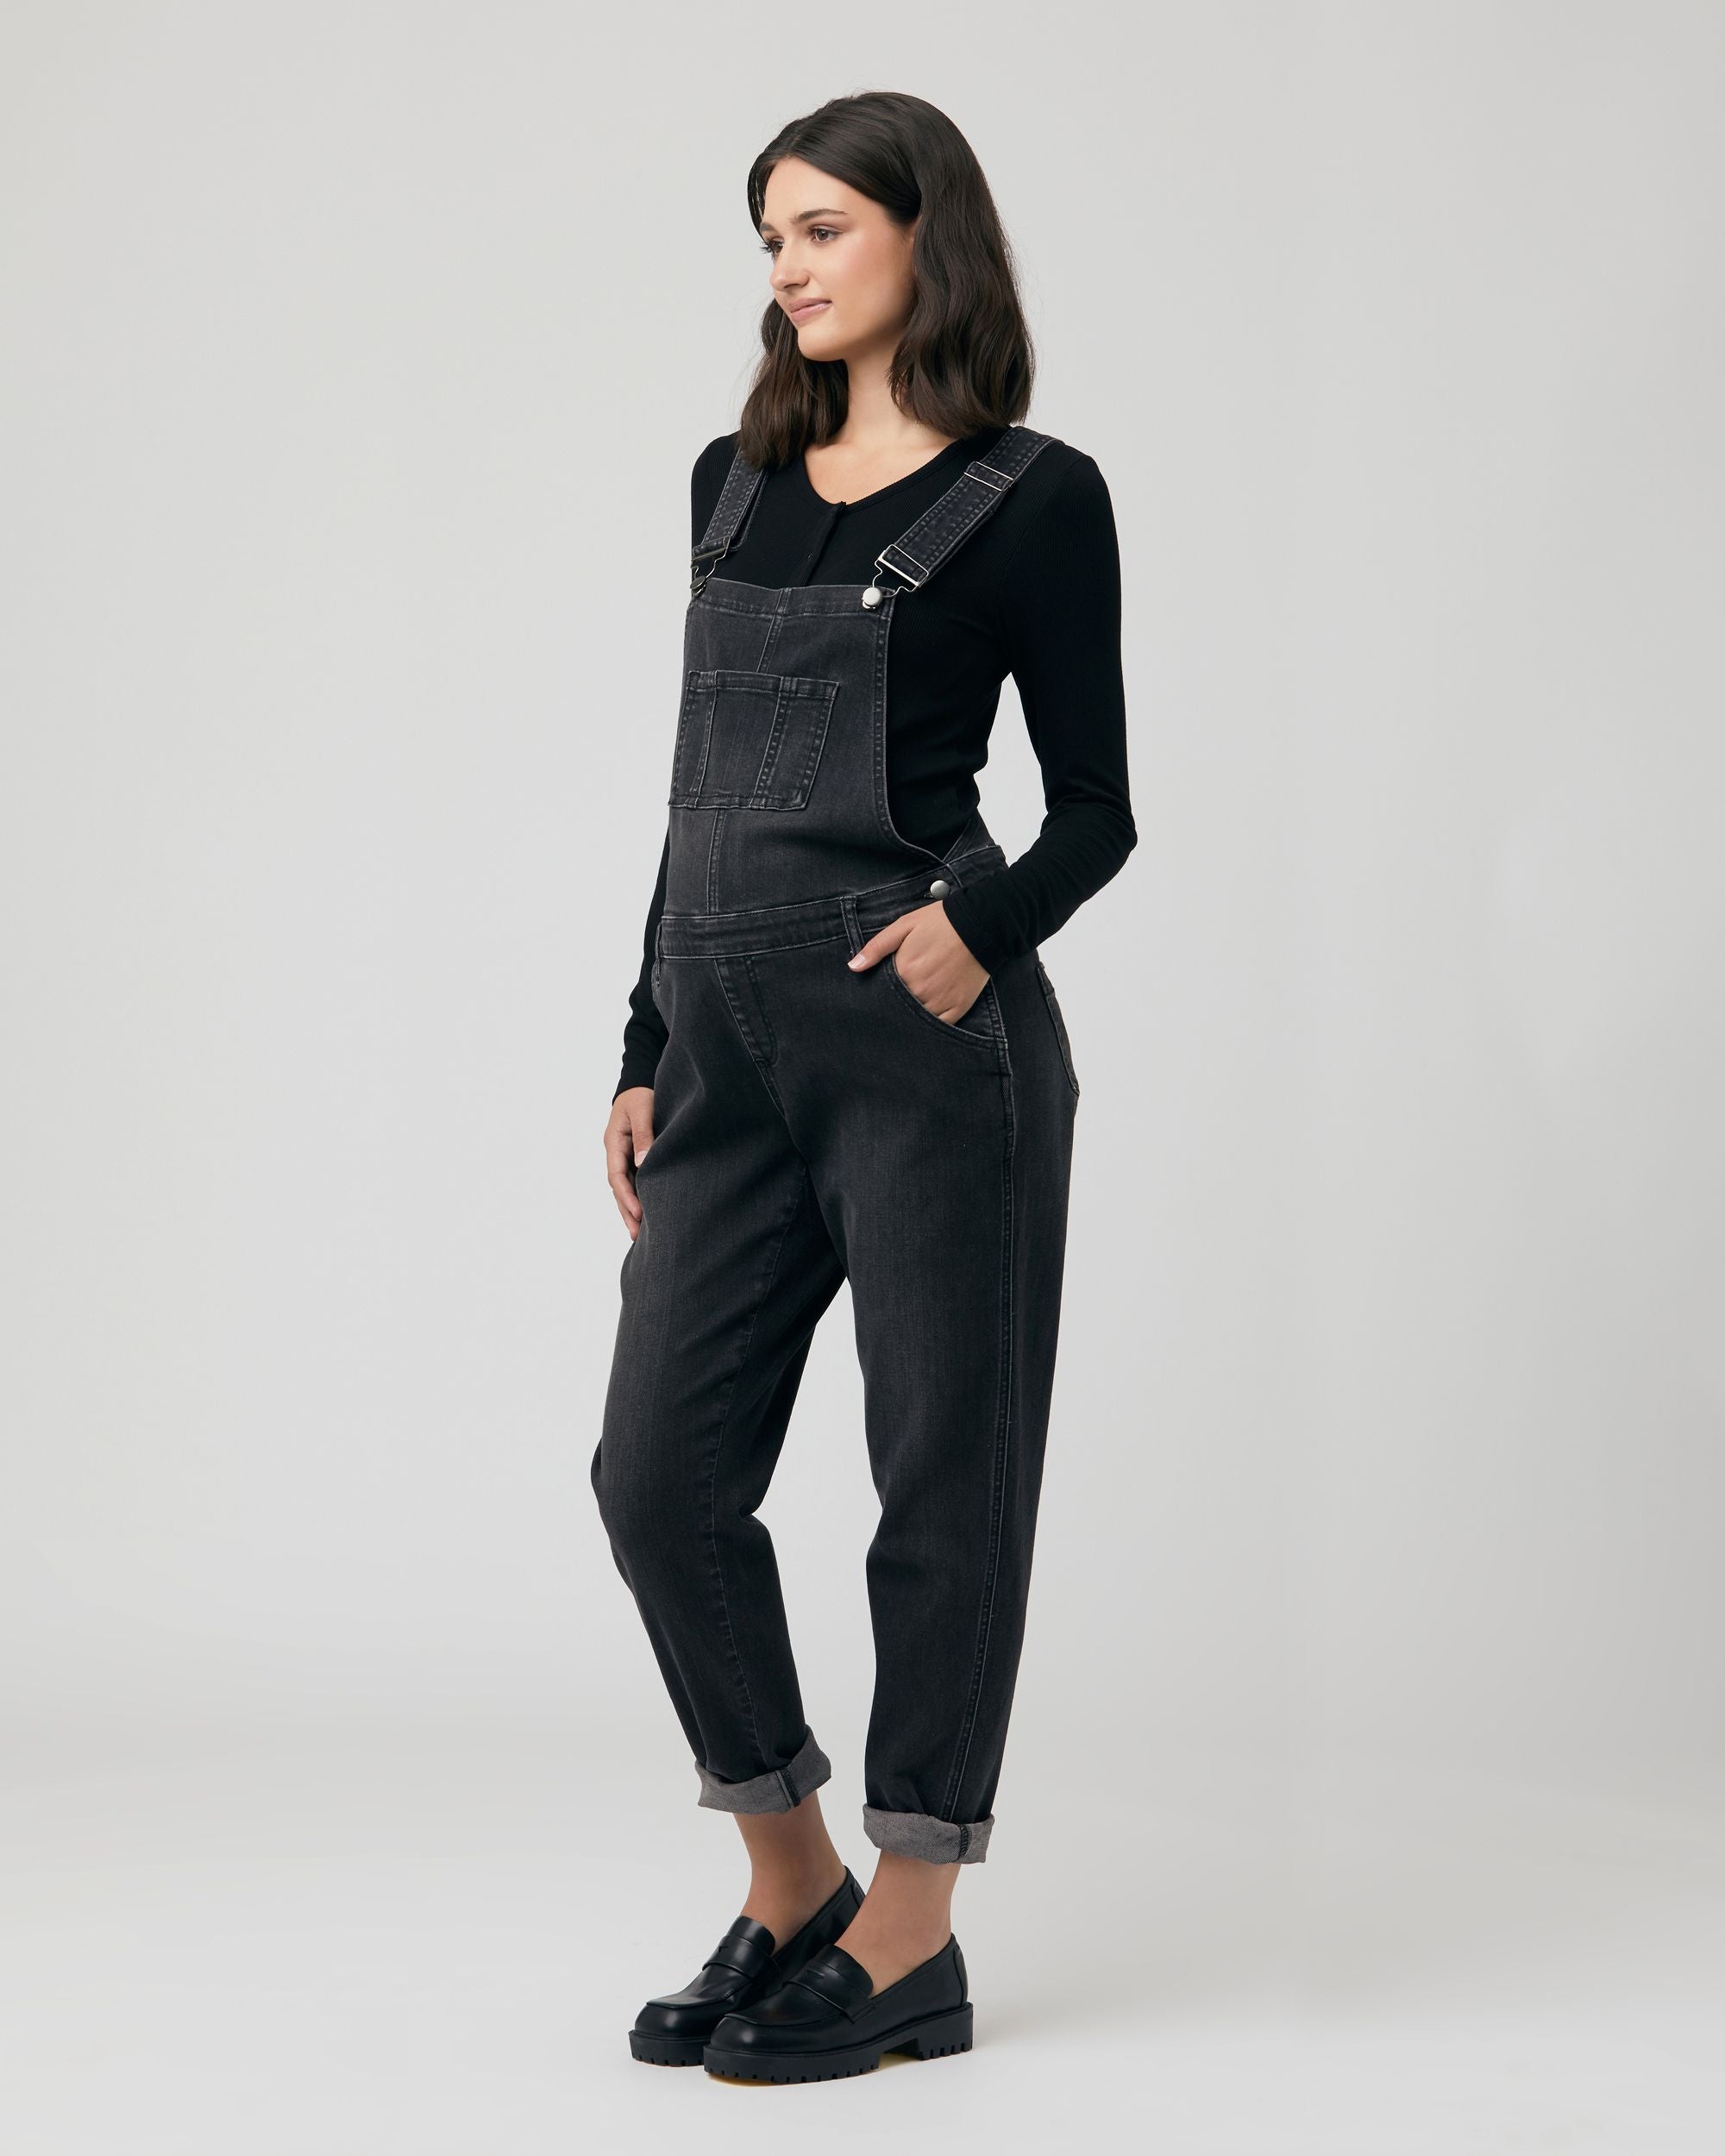 Women's Black Gardener Salopet Casual Adjustable Jeans Overalls Denim  Jumpsuit | eBay